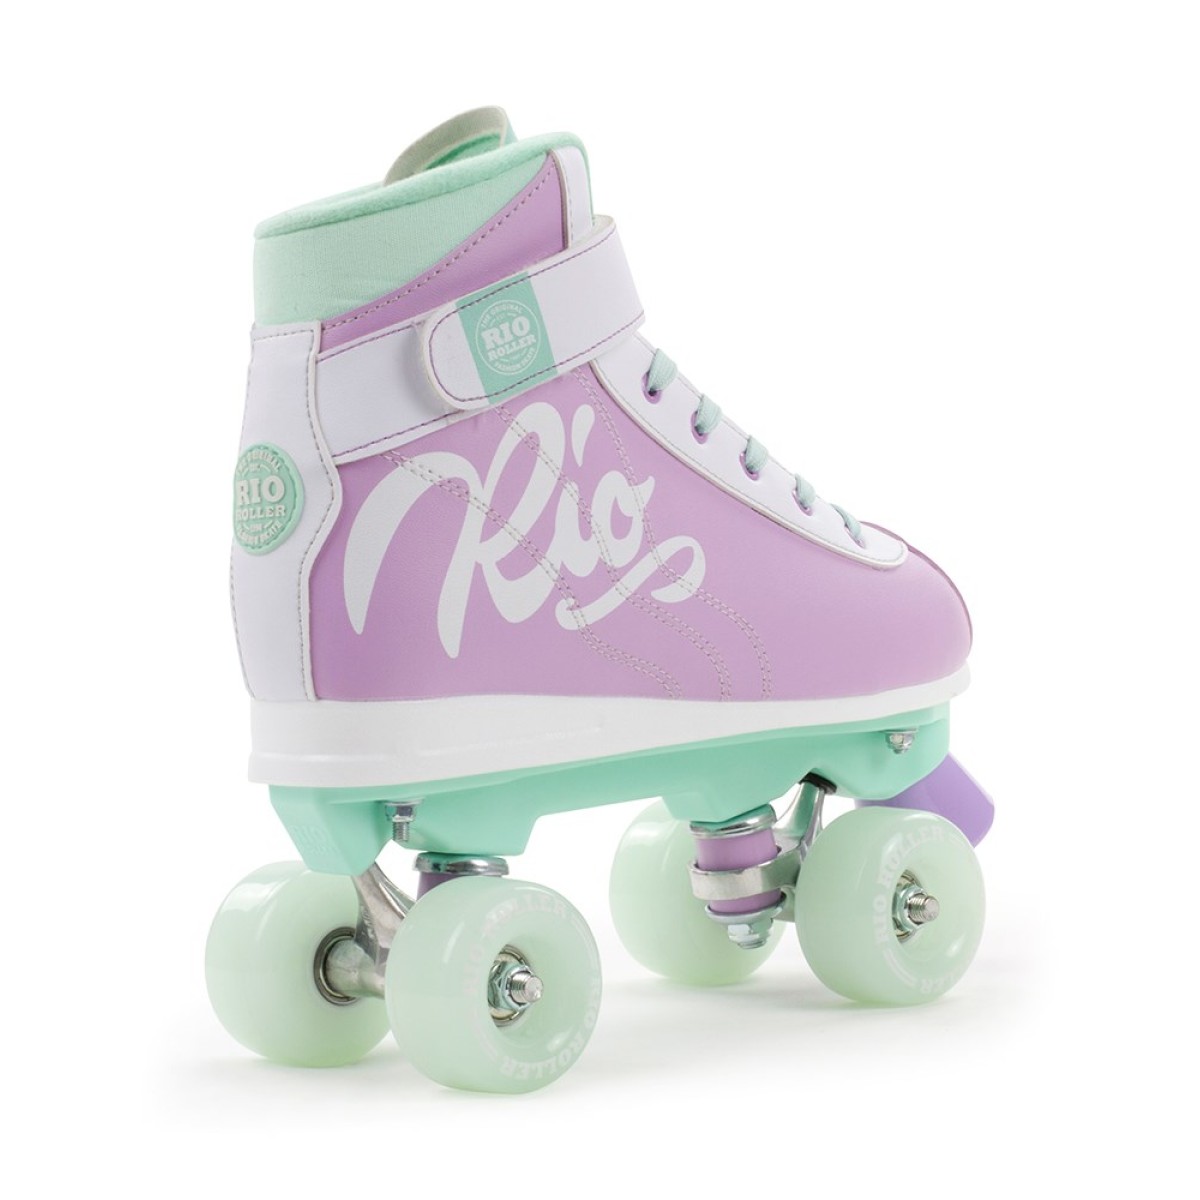 Quad skates Rio Roller Milkshake  RIO ROLLER - view 6